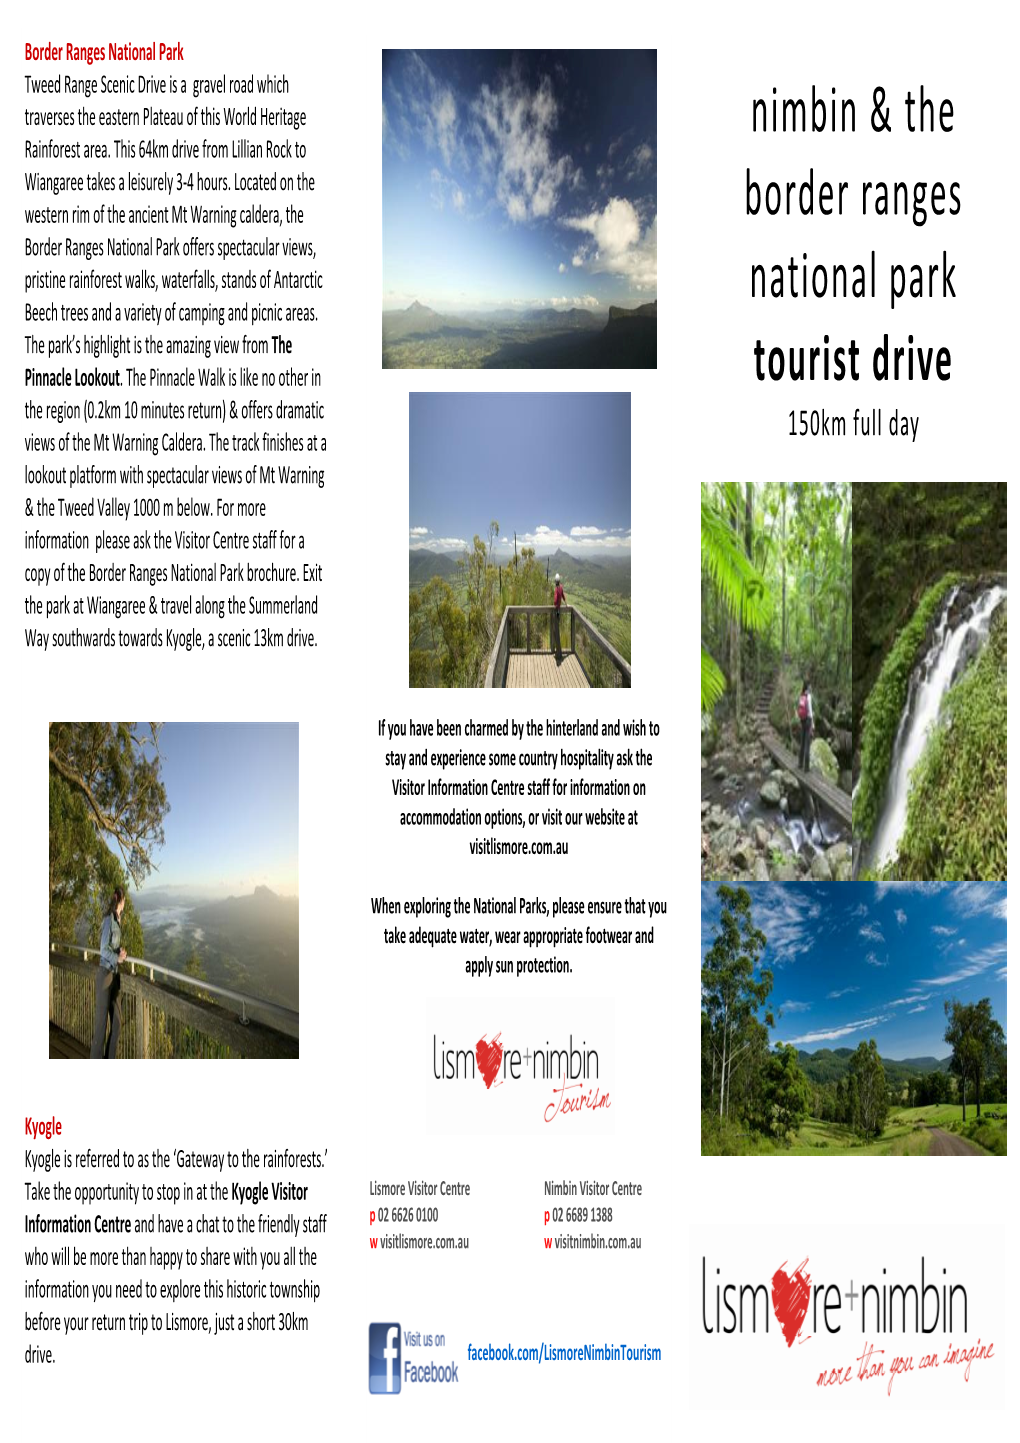 Nimbin & the Border Ranges National Park Tourist Drive 150Km Full